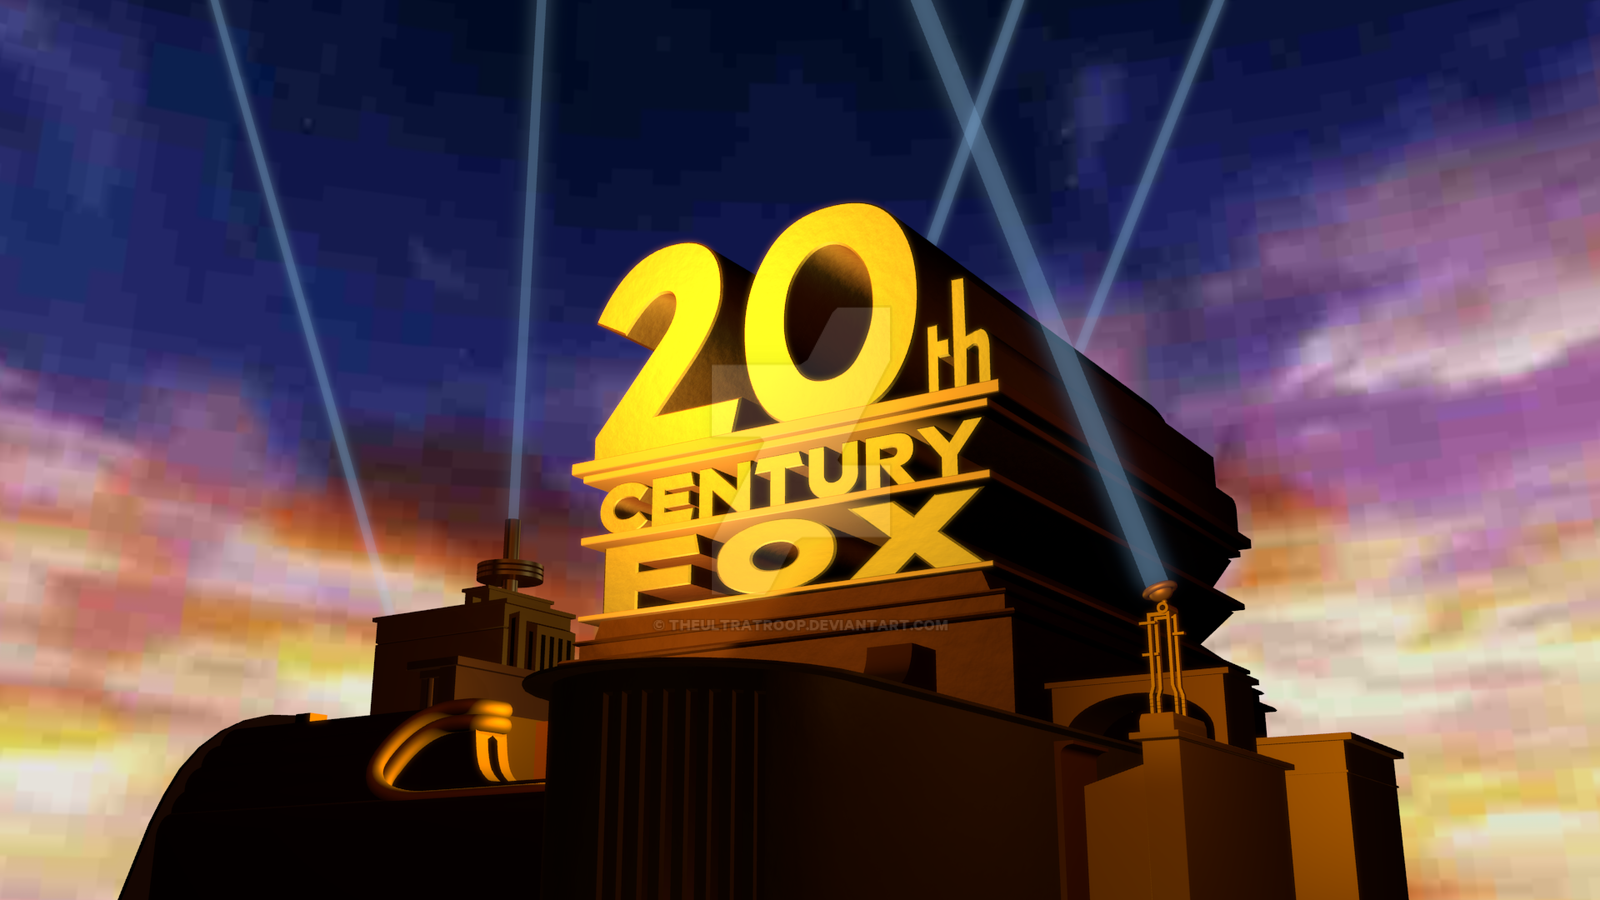 Century Fox 20th зажигалка. 20th Century Fox 1994. 20th Century Fox СТС. 20th Century Fox игры. Th fox